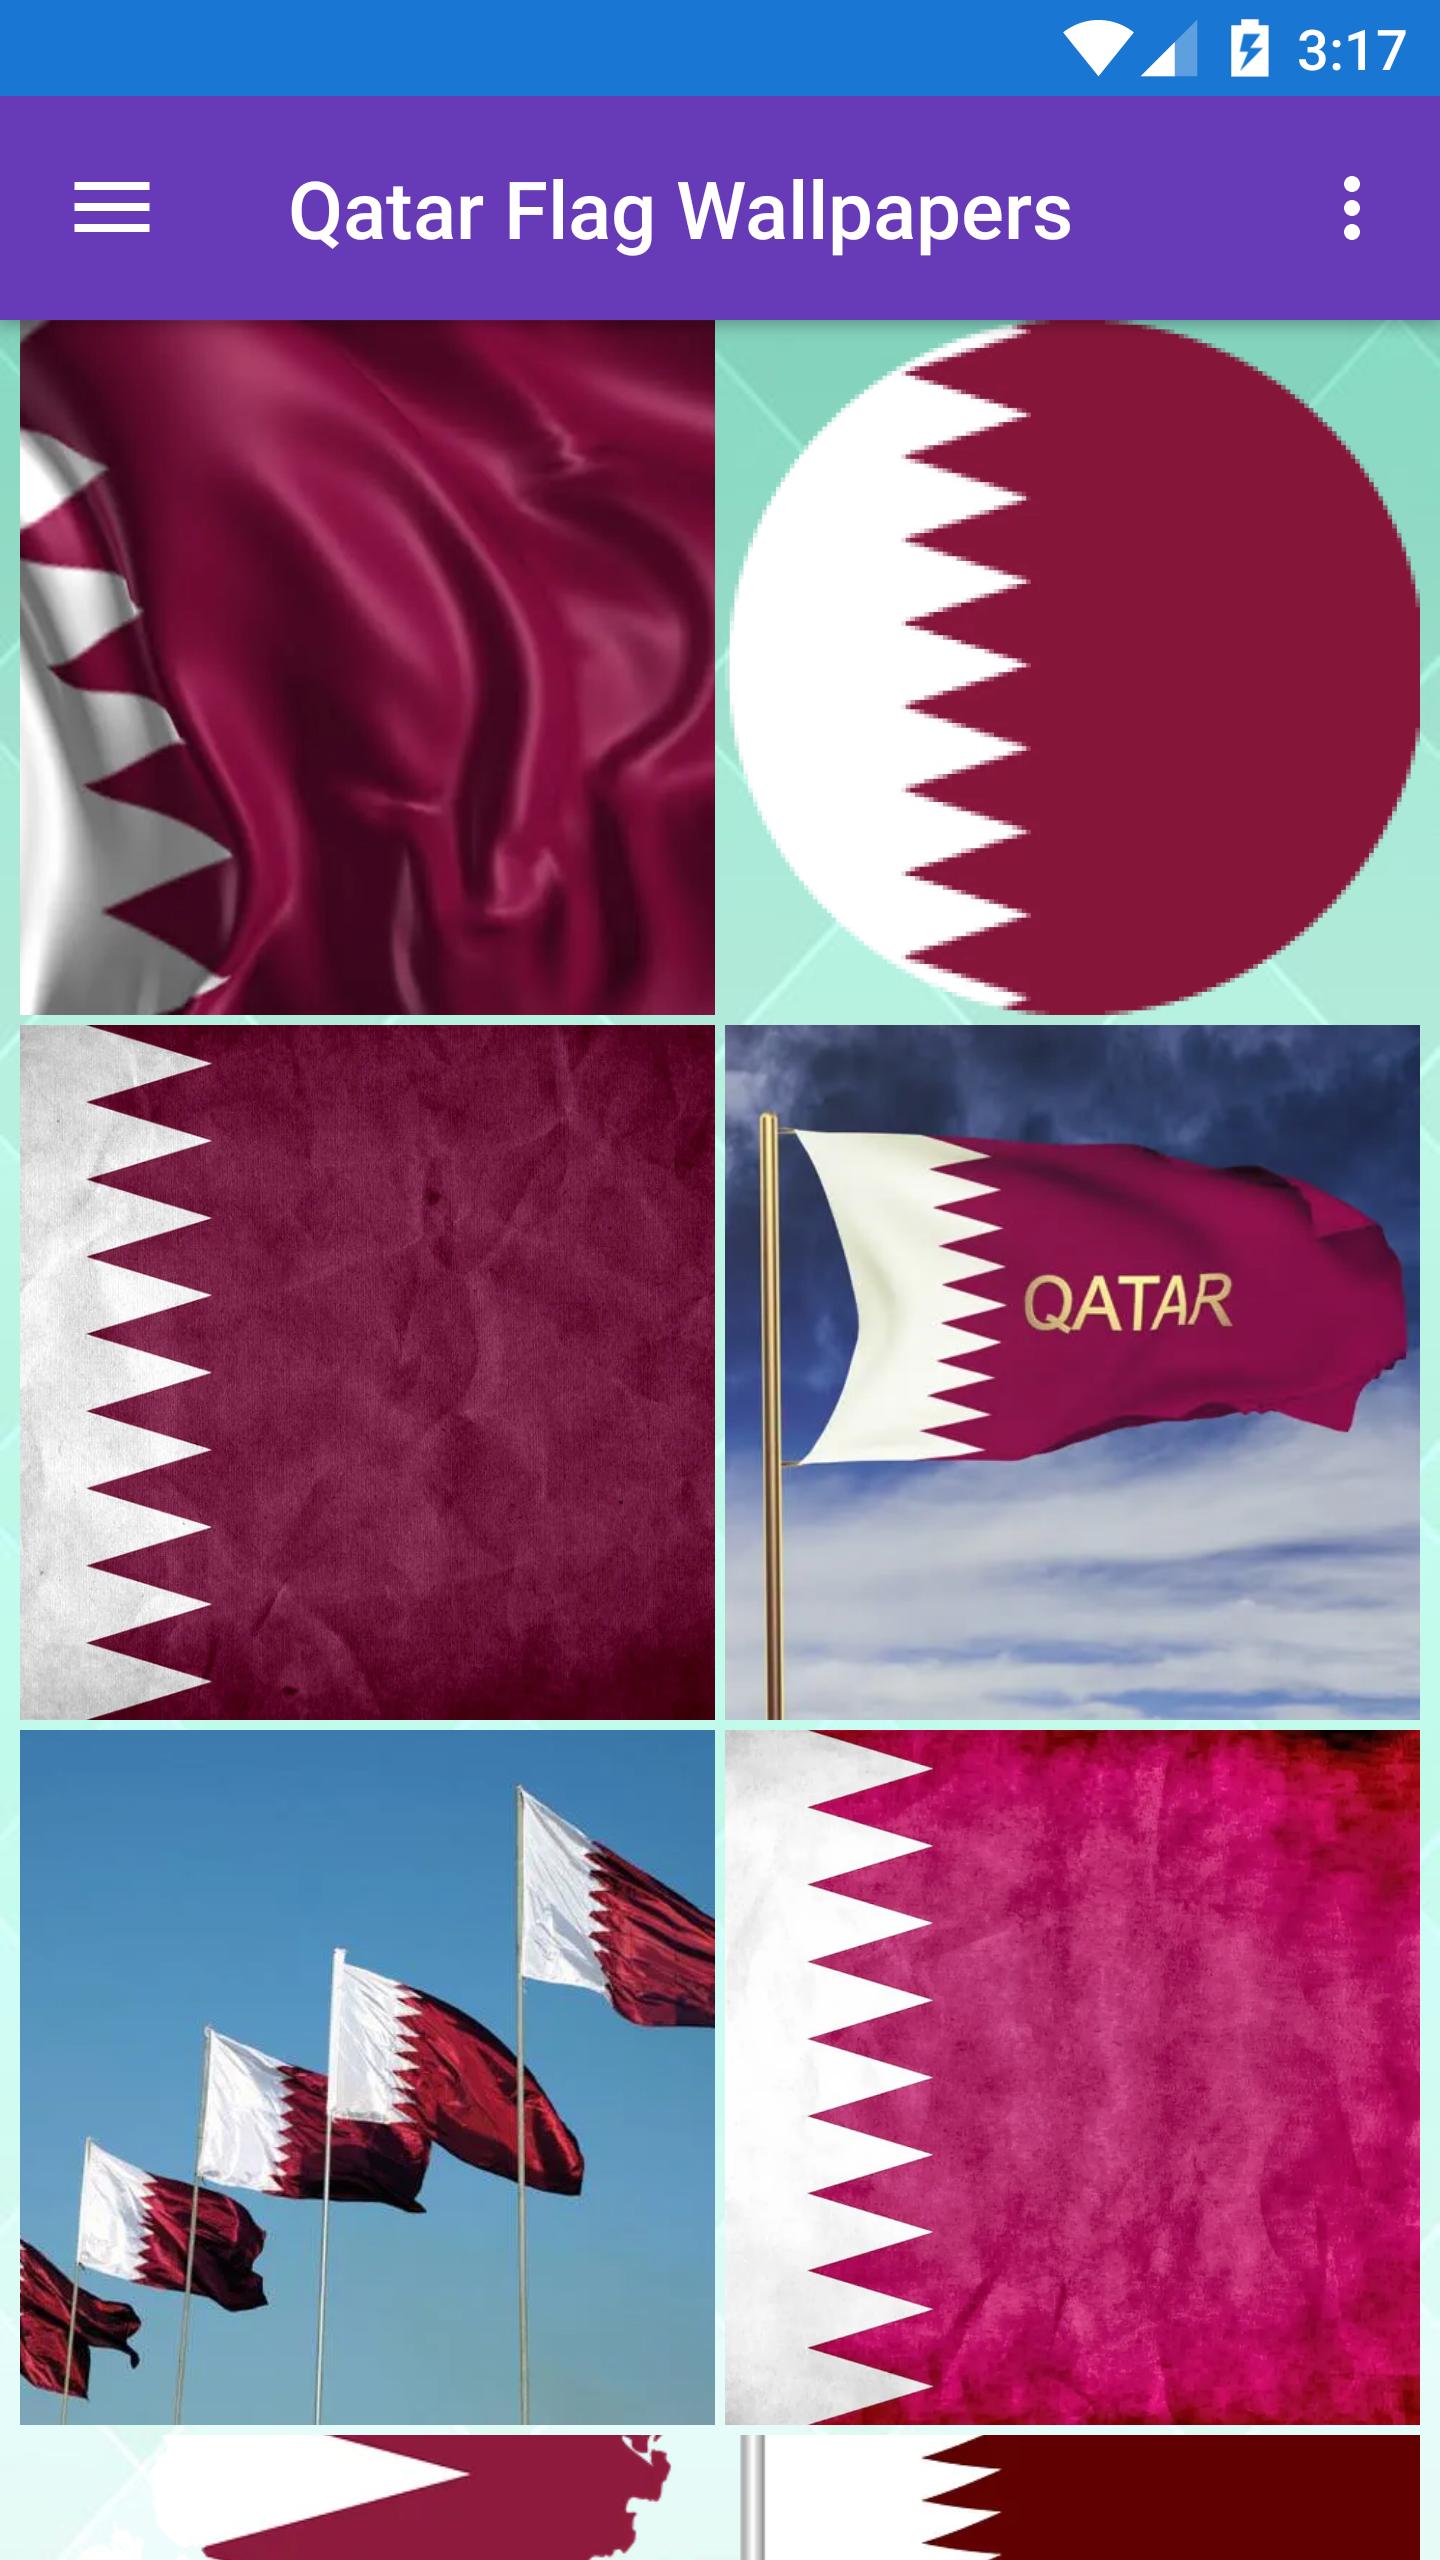 Qatar Flag Wallpapers